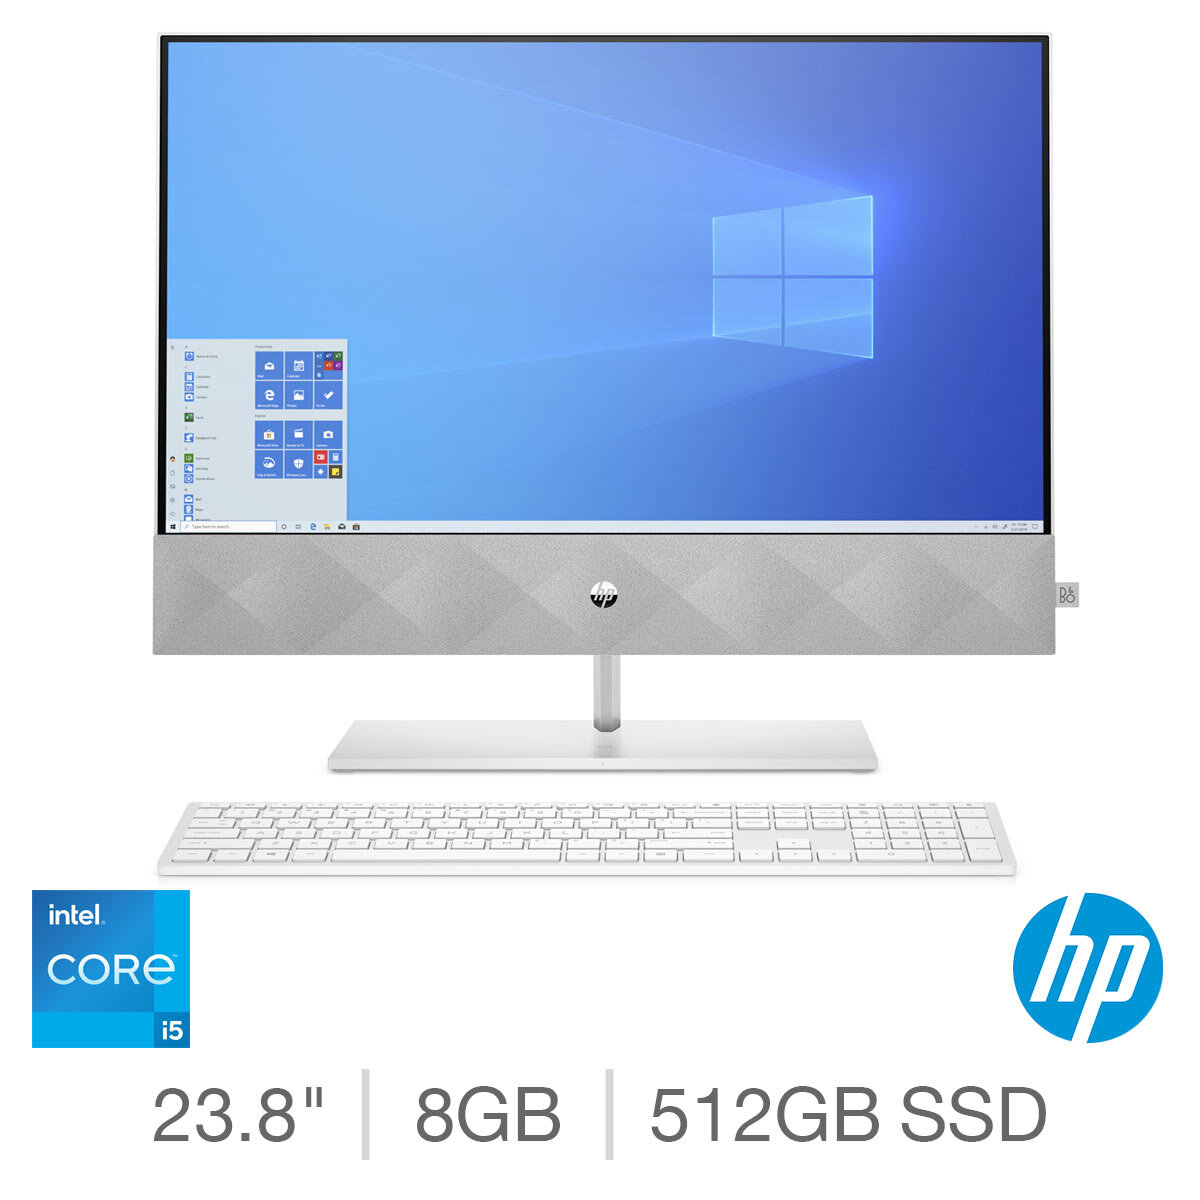 HP Pavilion, Intel Core i5, 8GB RAM, 512GB SSD, 23.8 Inch, All in One Desktop PC, 24-k1025na